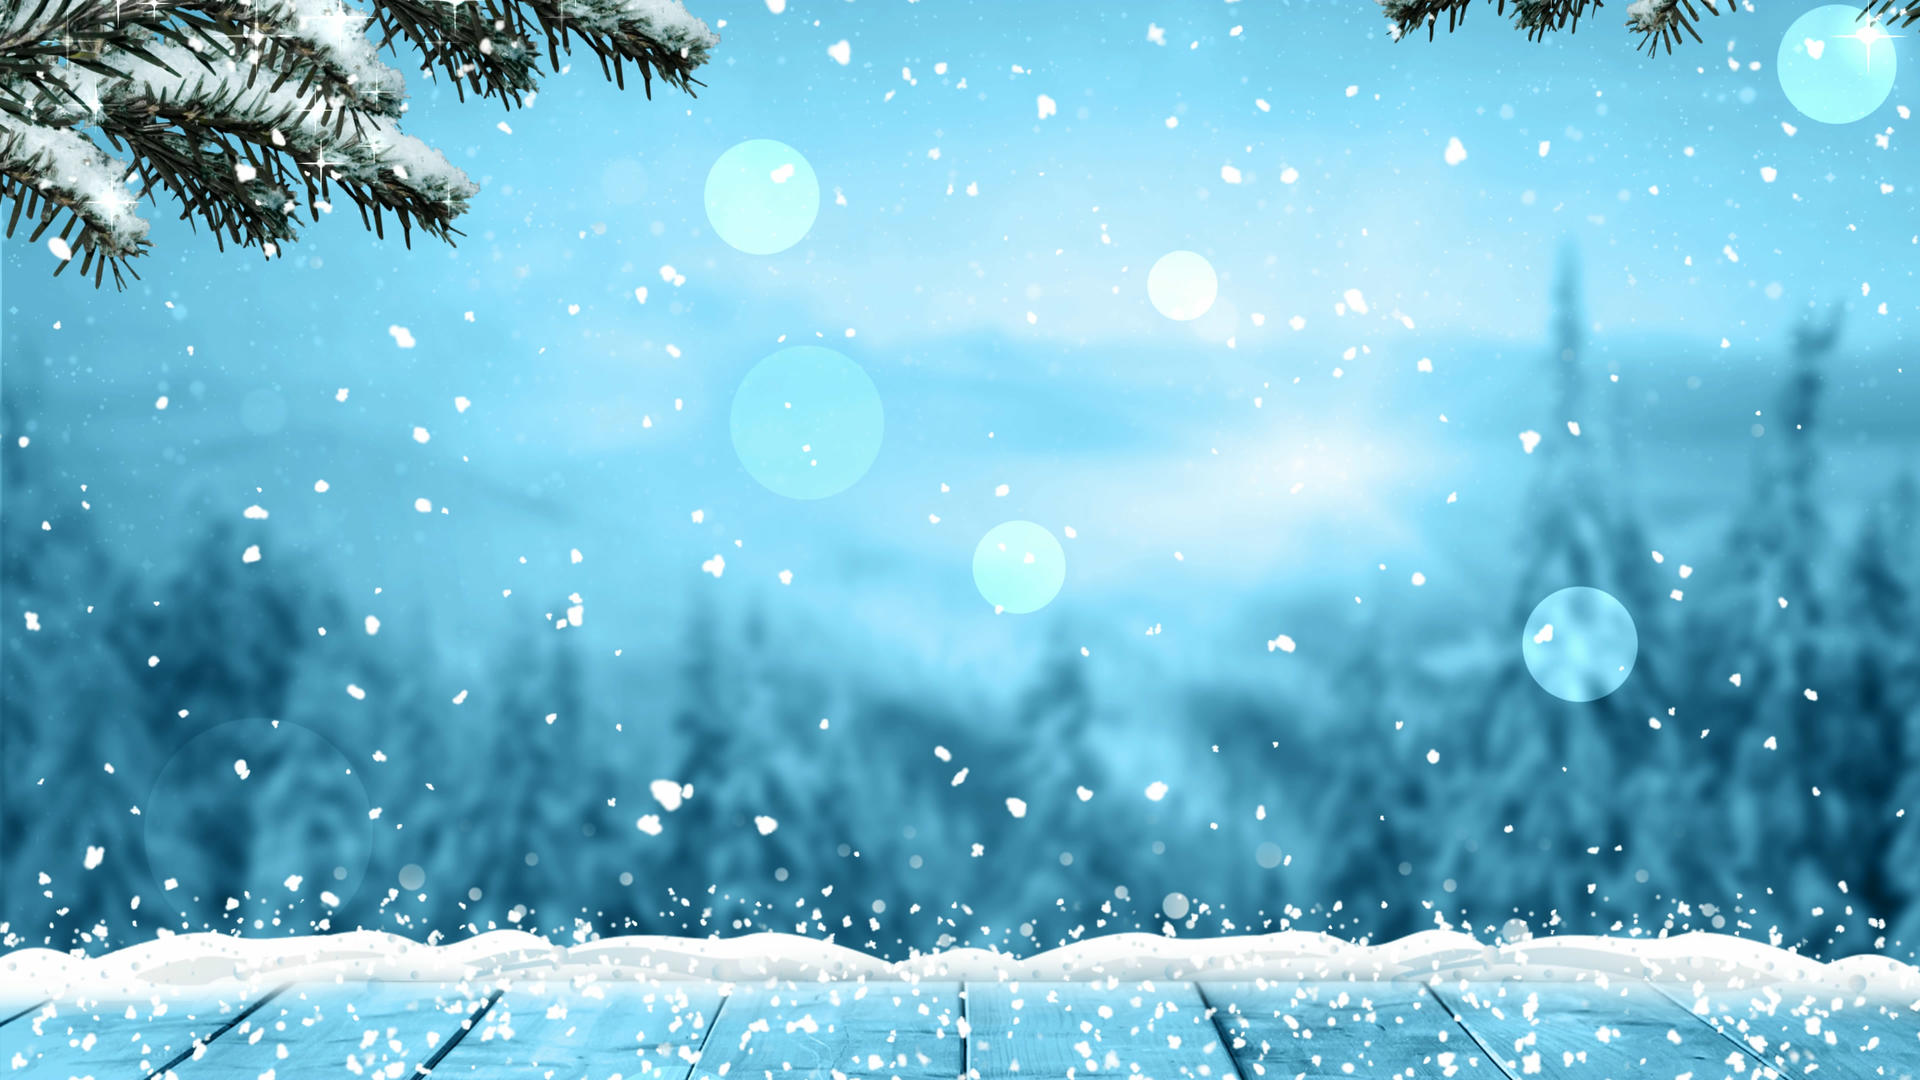 4K唯美的圣诞雪景背景素材视频的预览图